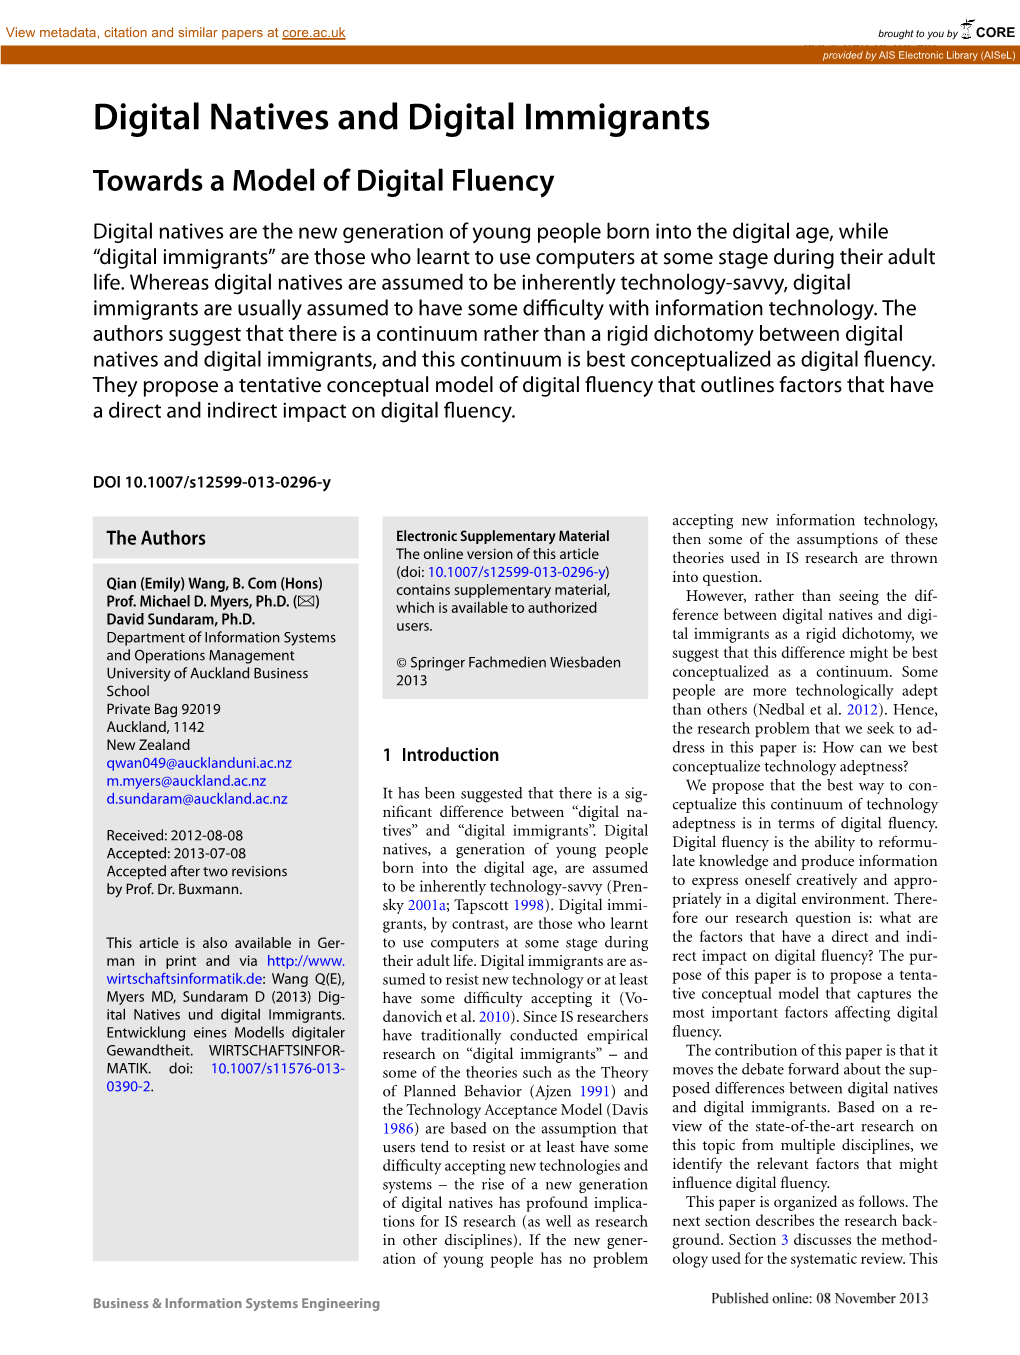 Digital Natives and Digital Immigrants Towards a Model of Digital Fluency